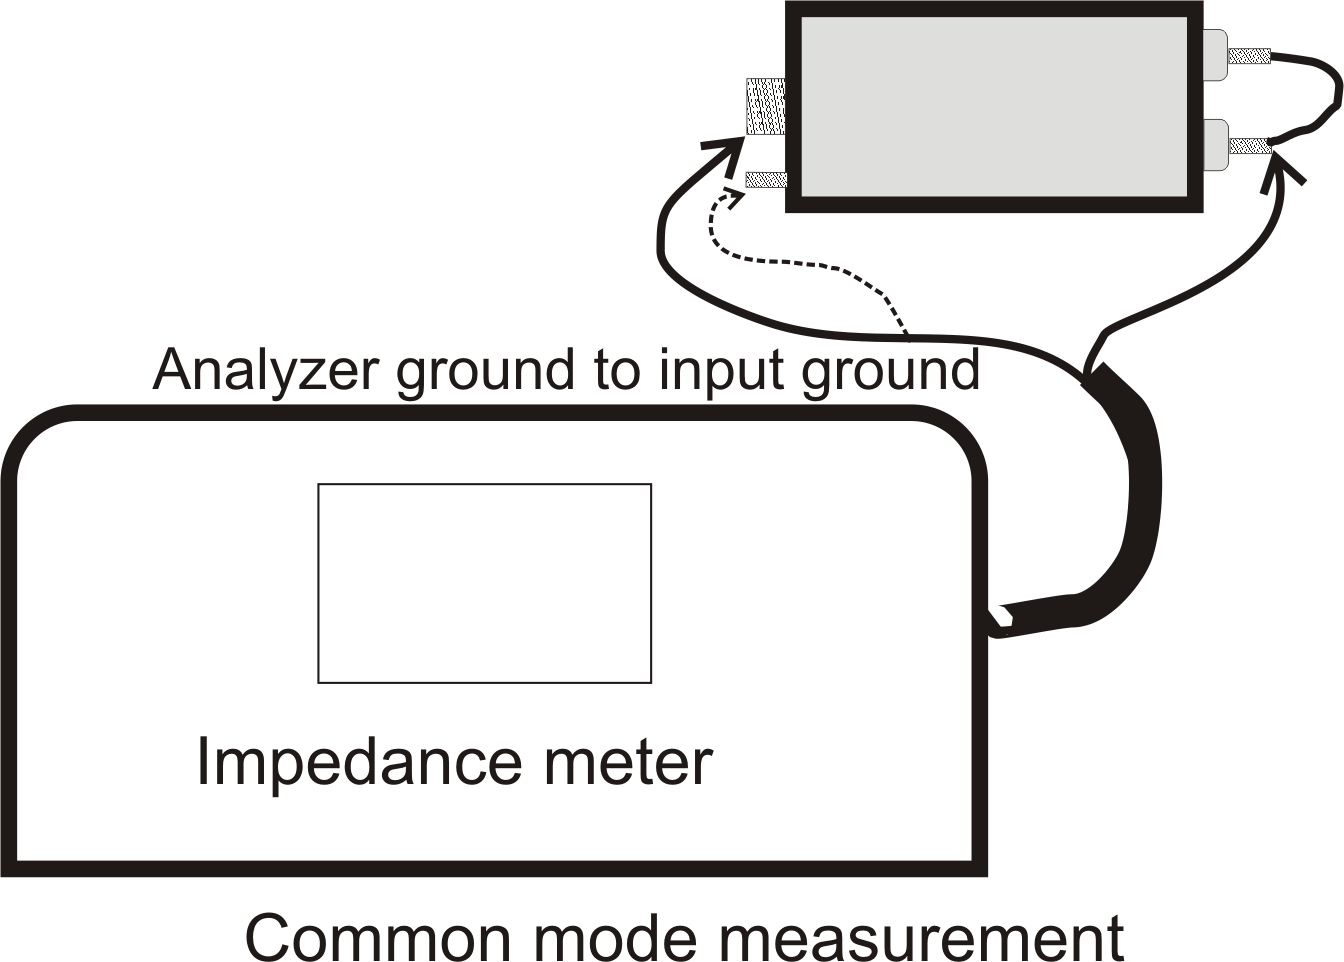 Common mode measurements